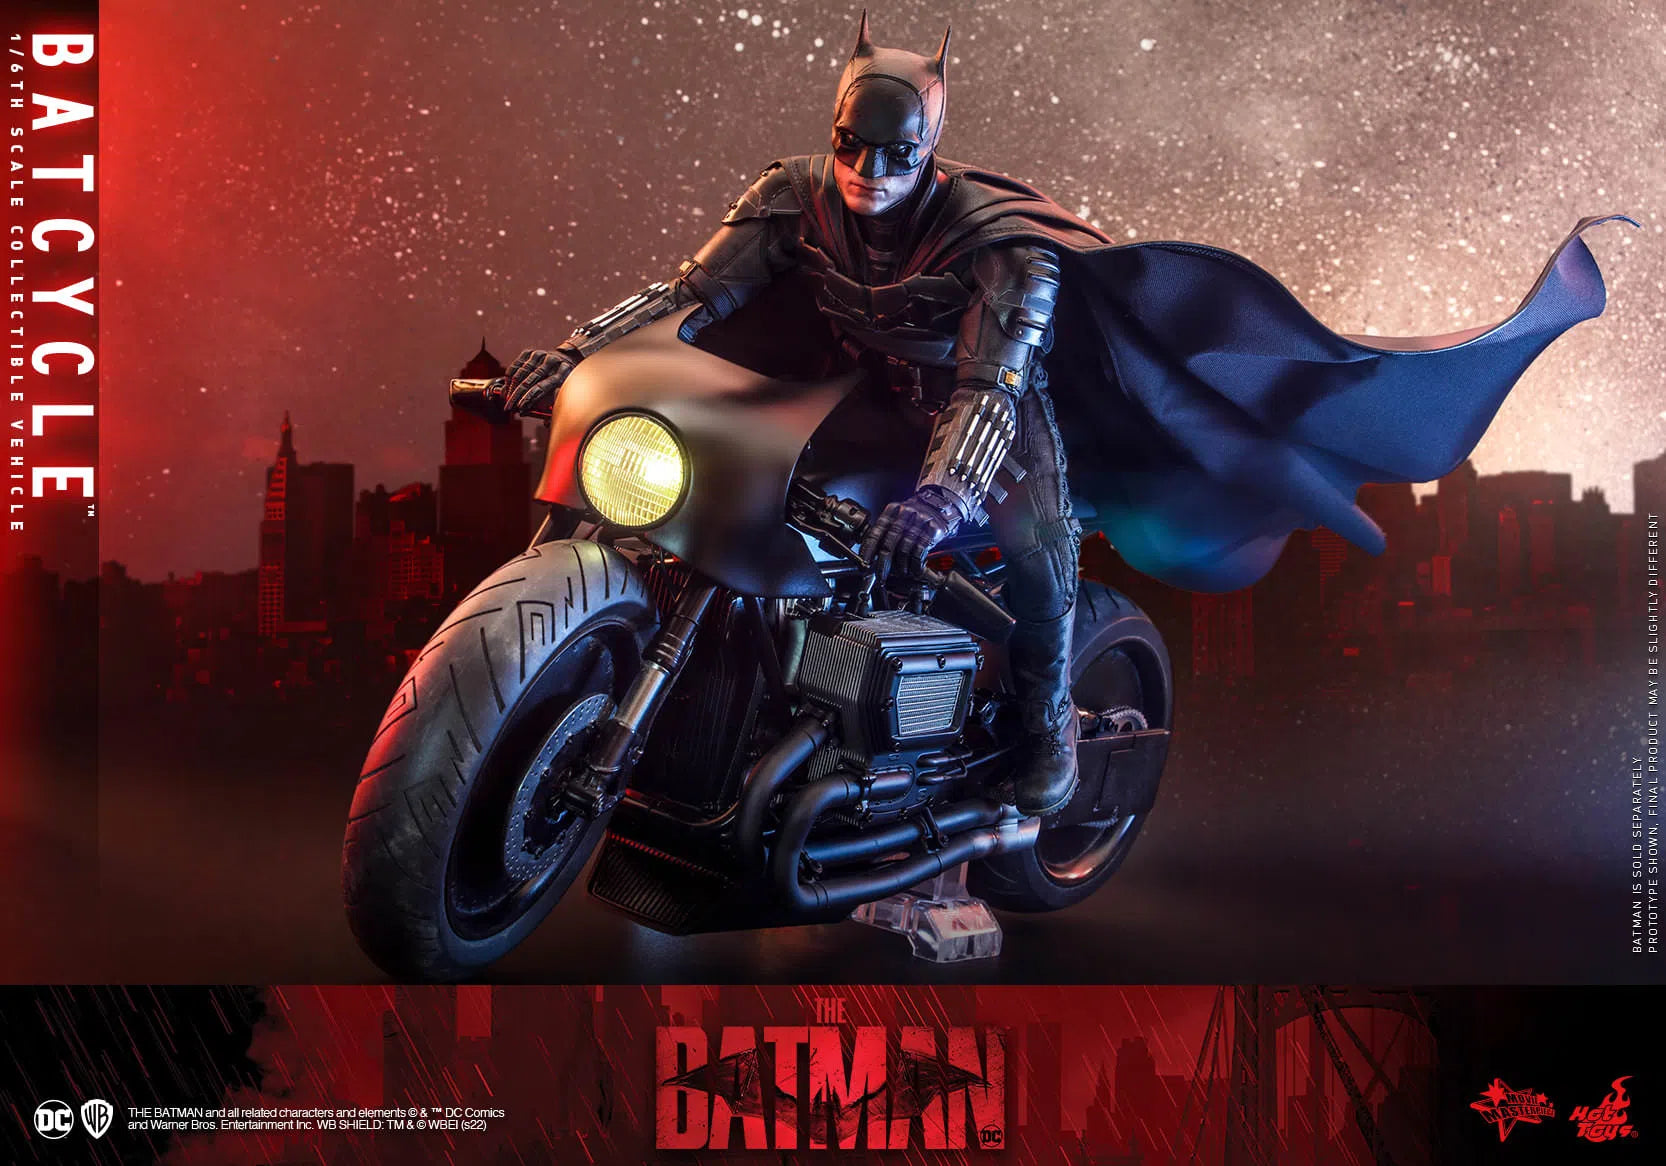 Batcycle: The Batman: DC Comics: MMS642: Hot Toys